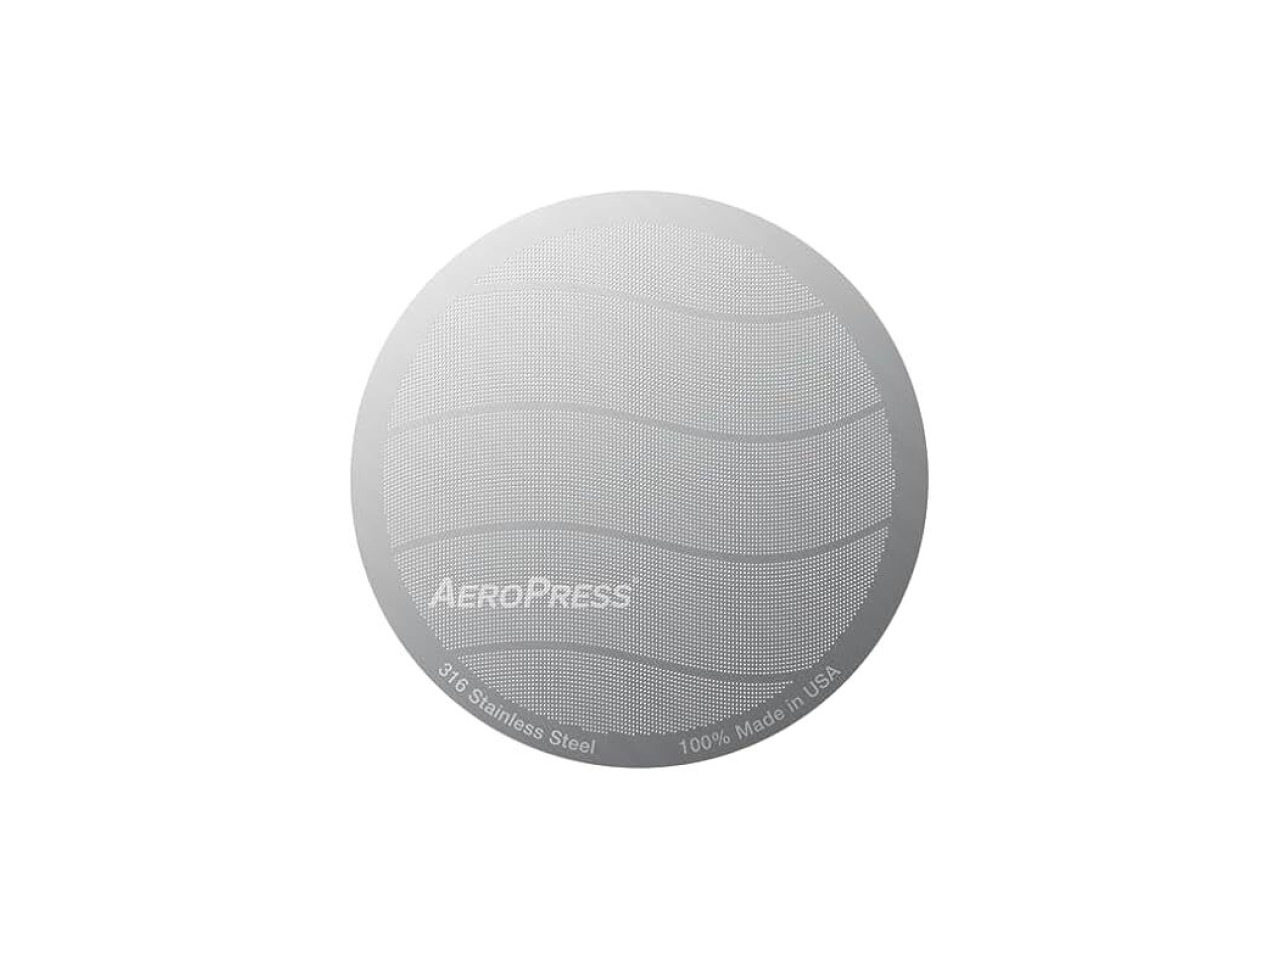 An Aeropress stainless steel filter, as part of a post on Aeropresscoffeemakers.